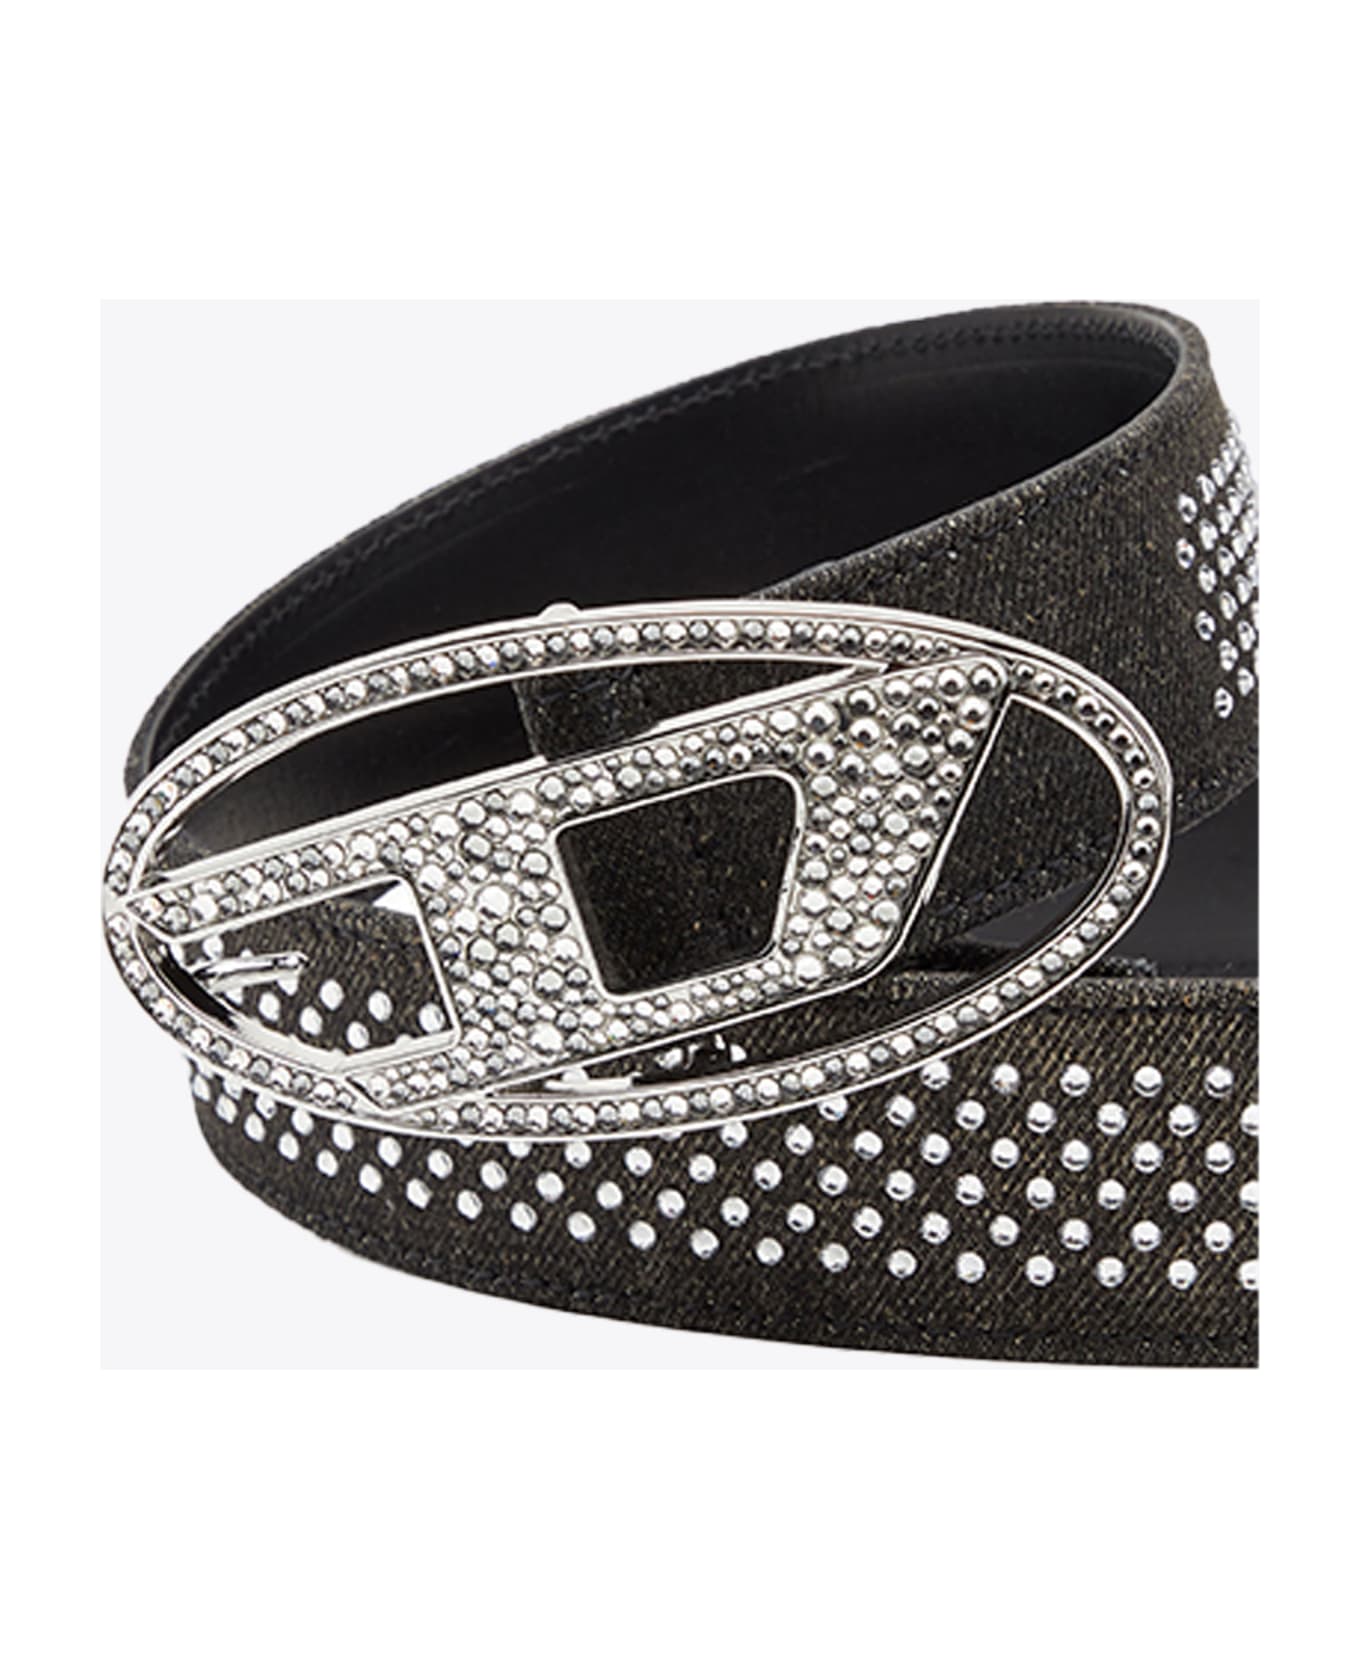 Diesel Oval D Logo B-1dr Strass Black denim and leather belt with crystals - B-1dr Strass - Denim nero name:456